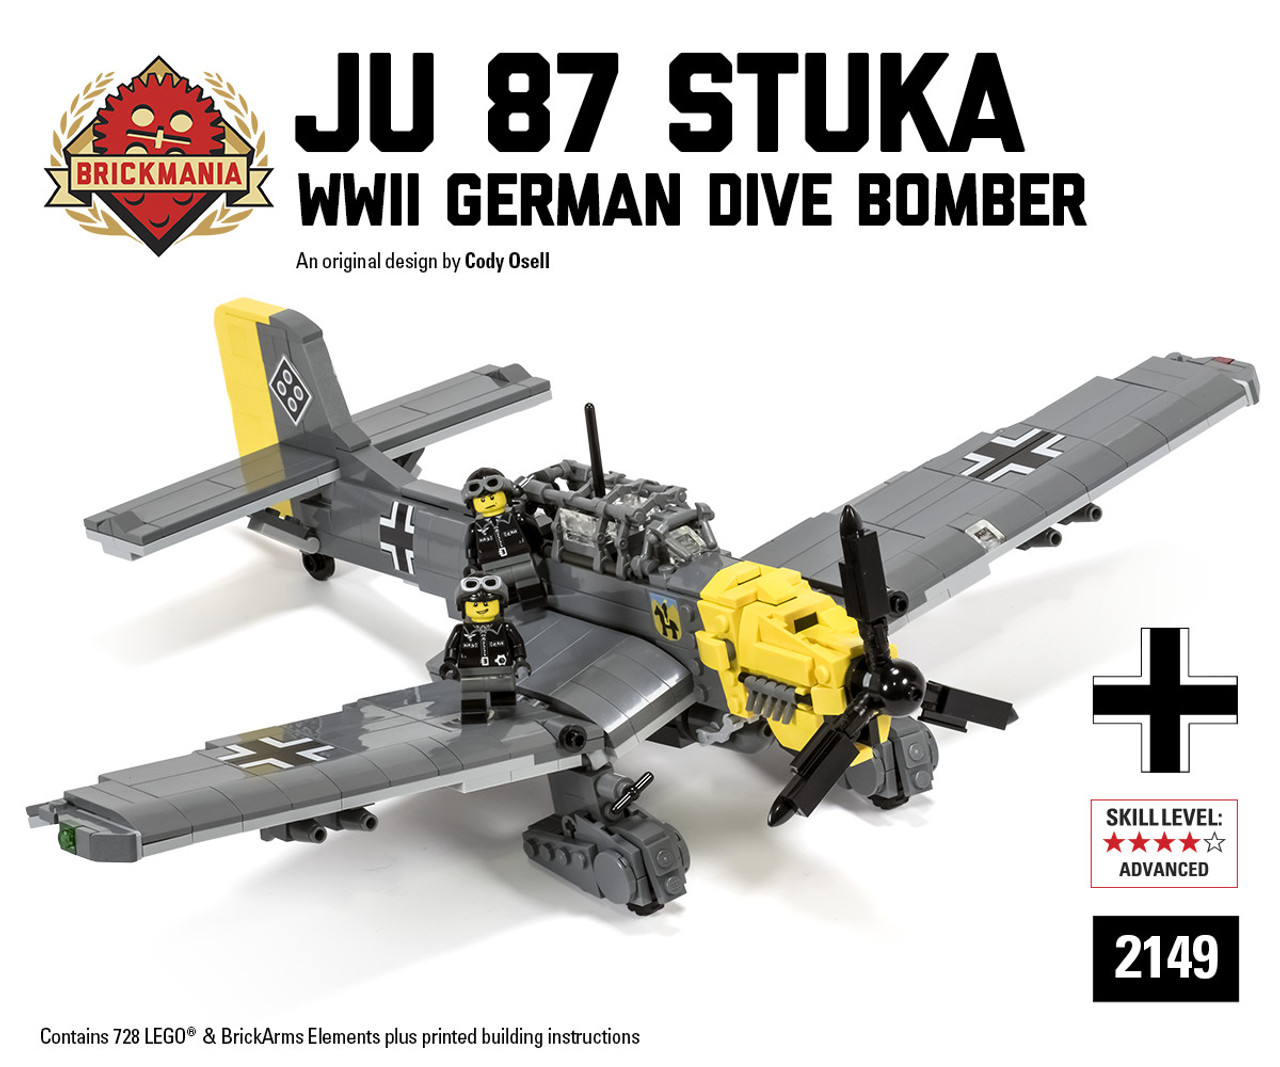 Ju 87 B-2 Stuka - Brickmania Toys